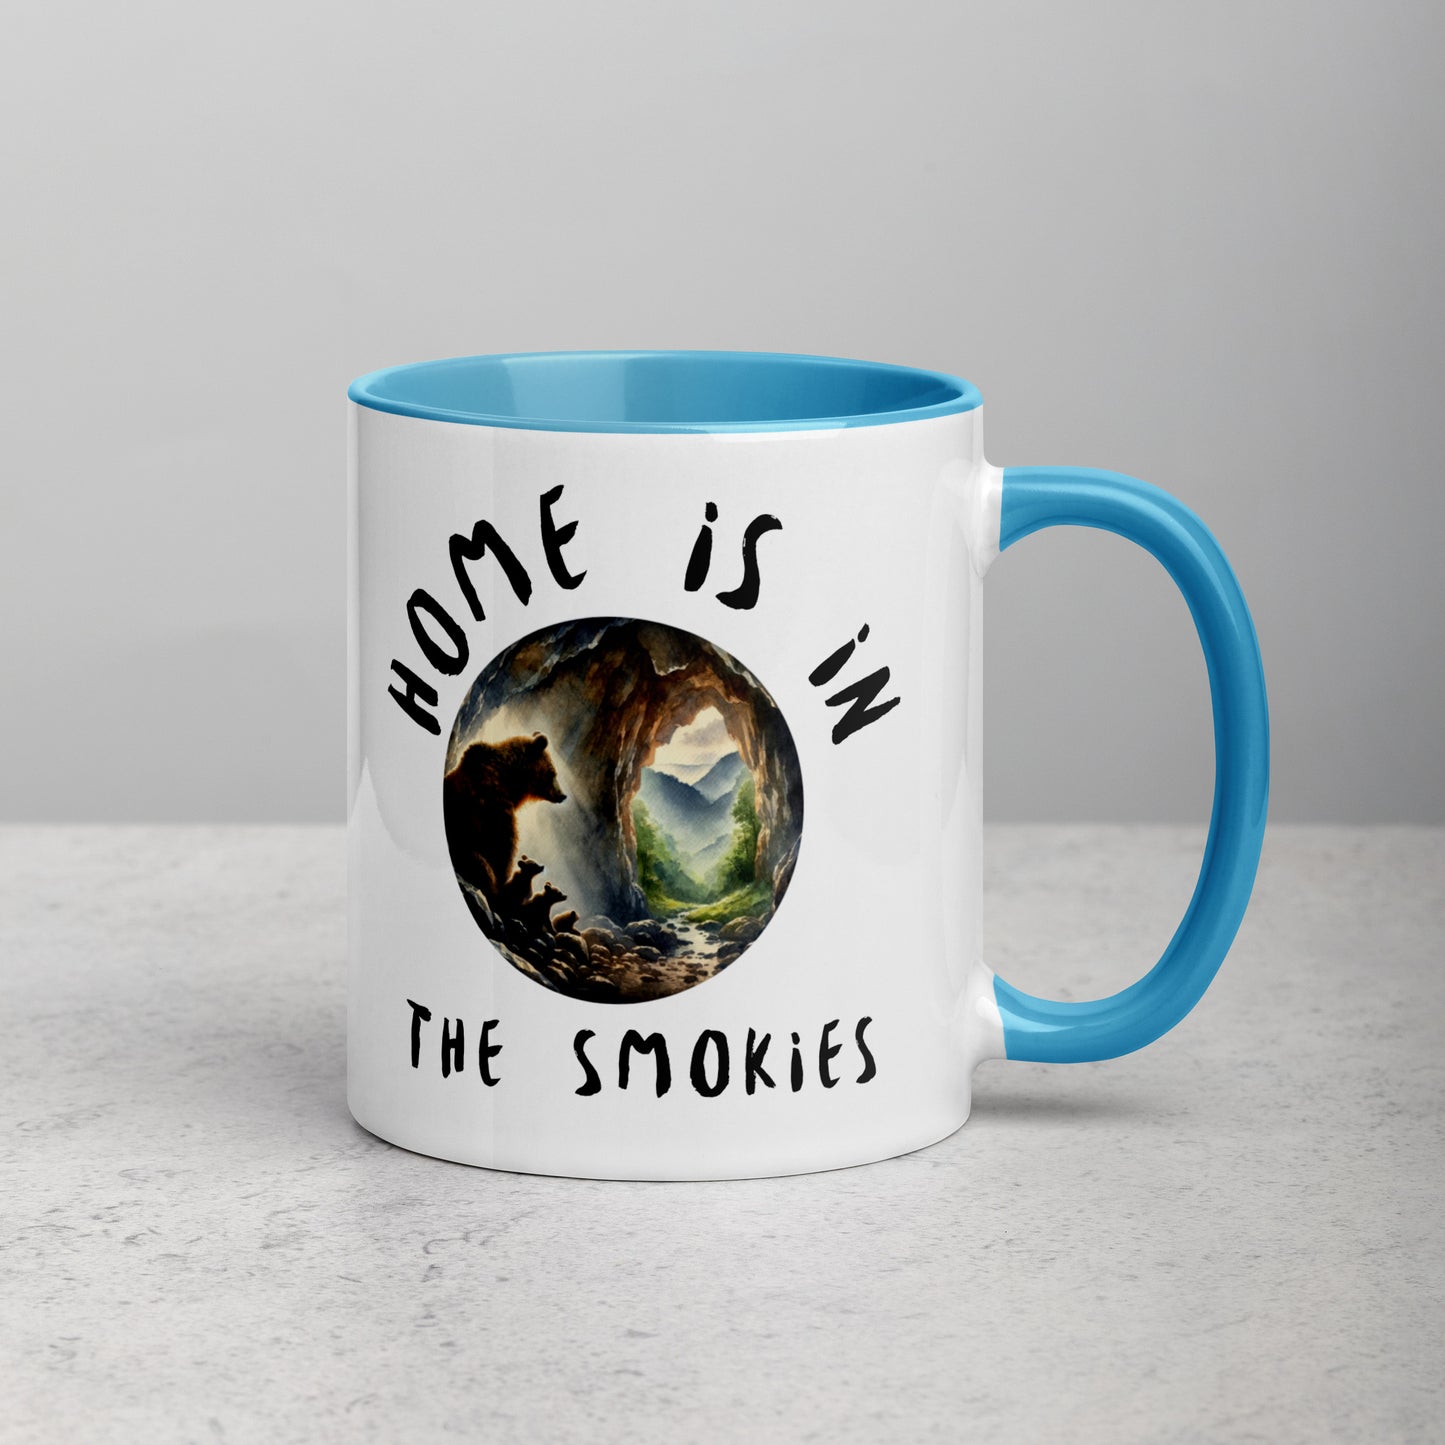 "Home is in the smokies" mug